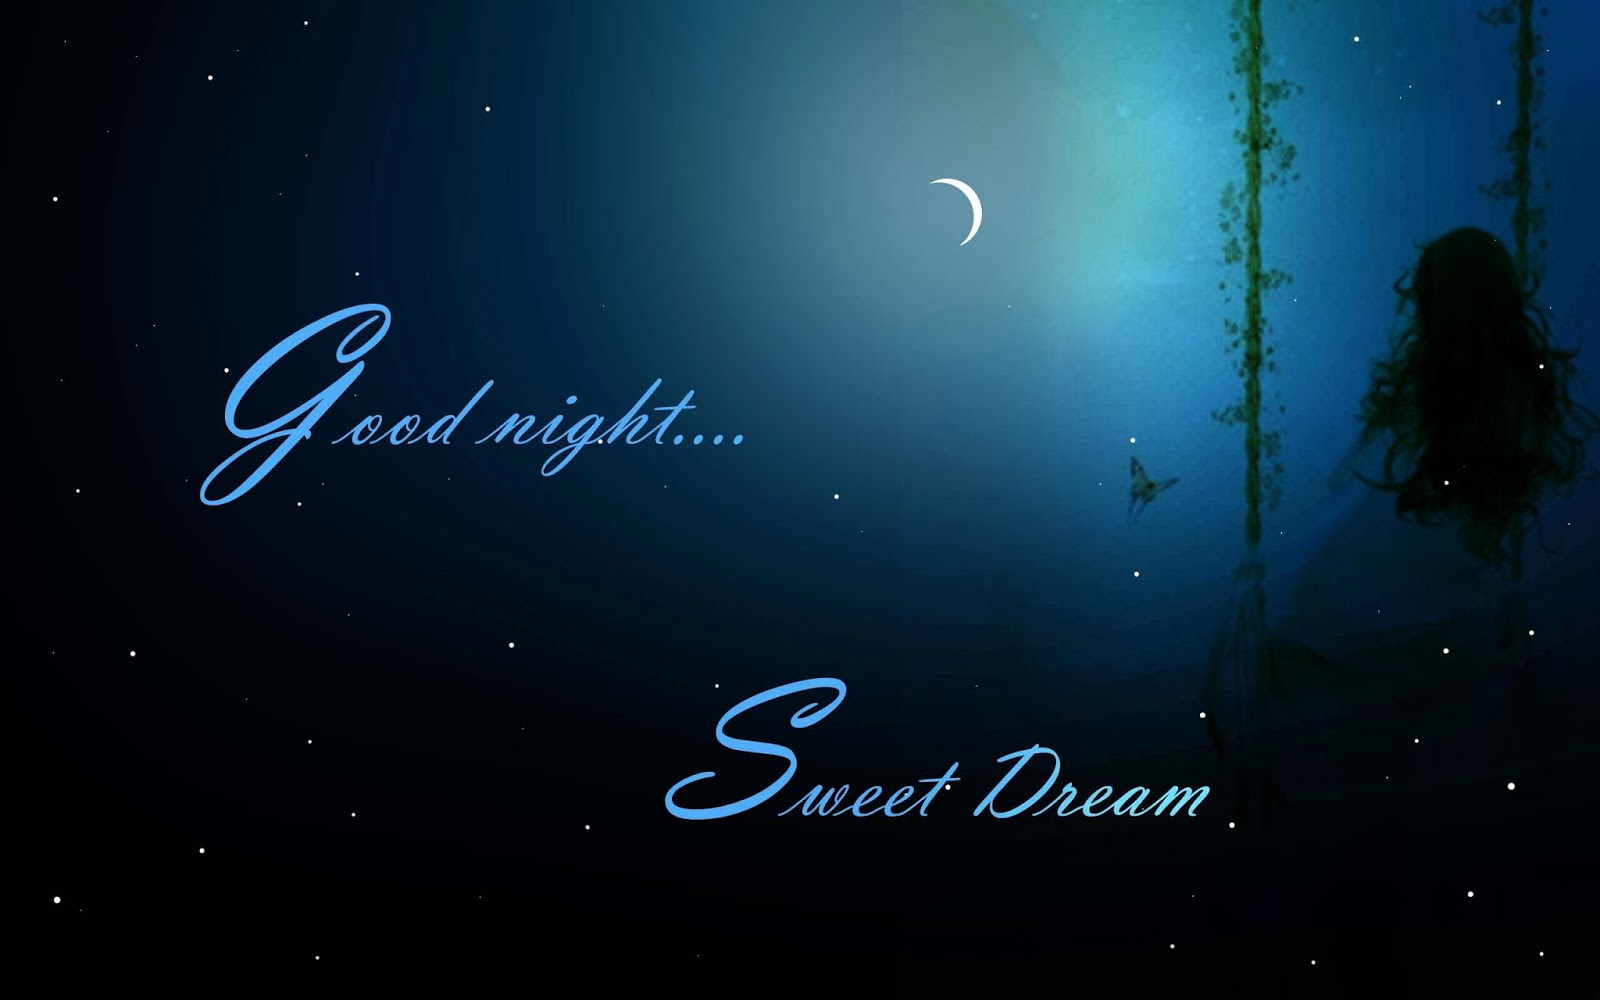 Good Morning Good Night Wallpaper - Gud Night Images Free Download - HD Wallpaper 